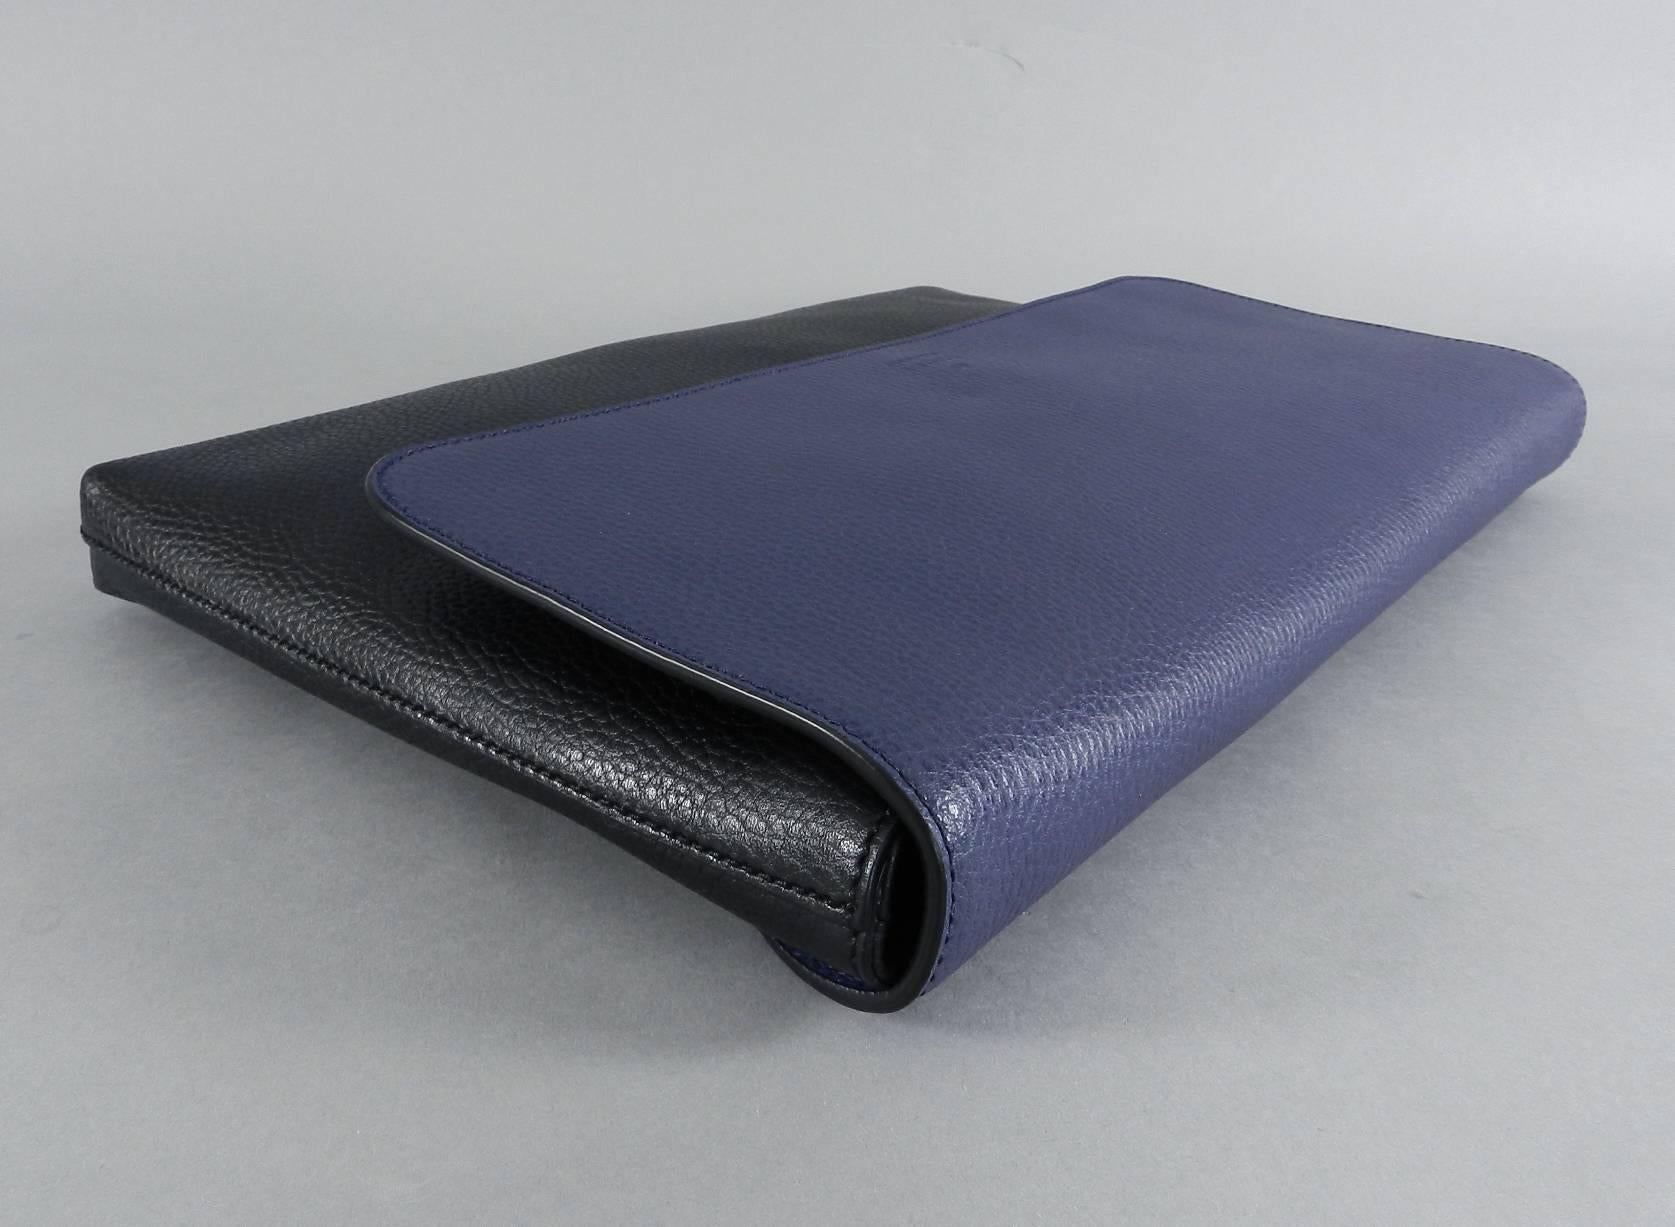 GUCCI Blue and Black Leather Laptop Computer Bag / Portfolio 1